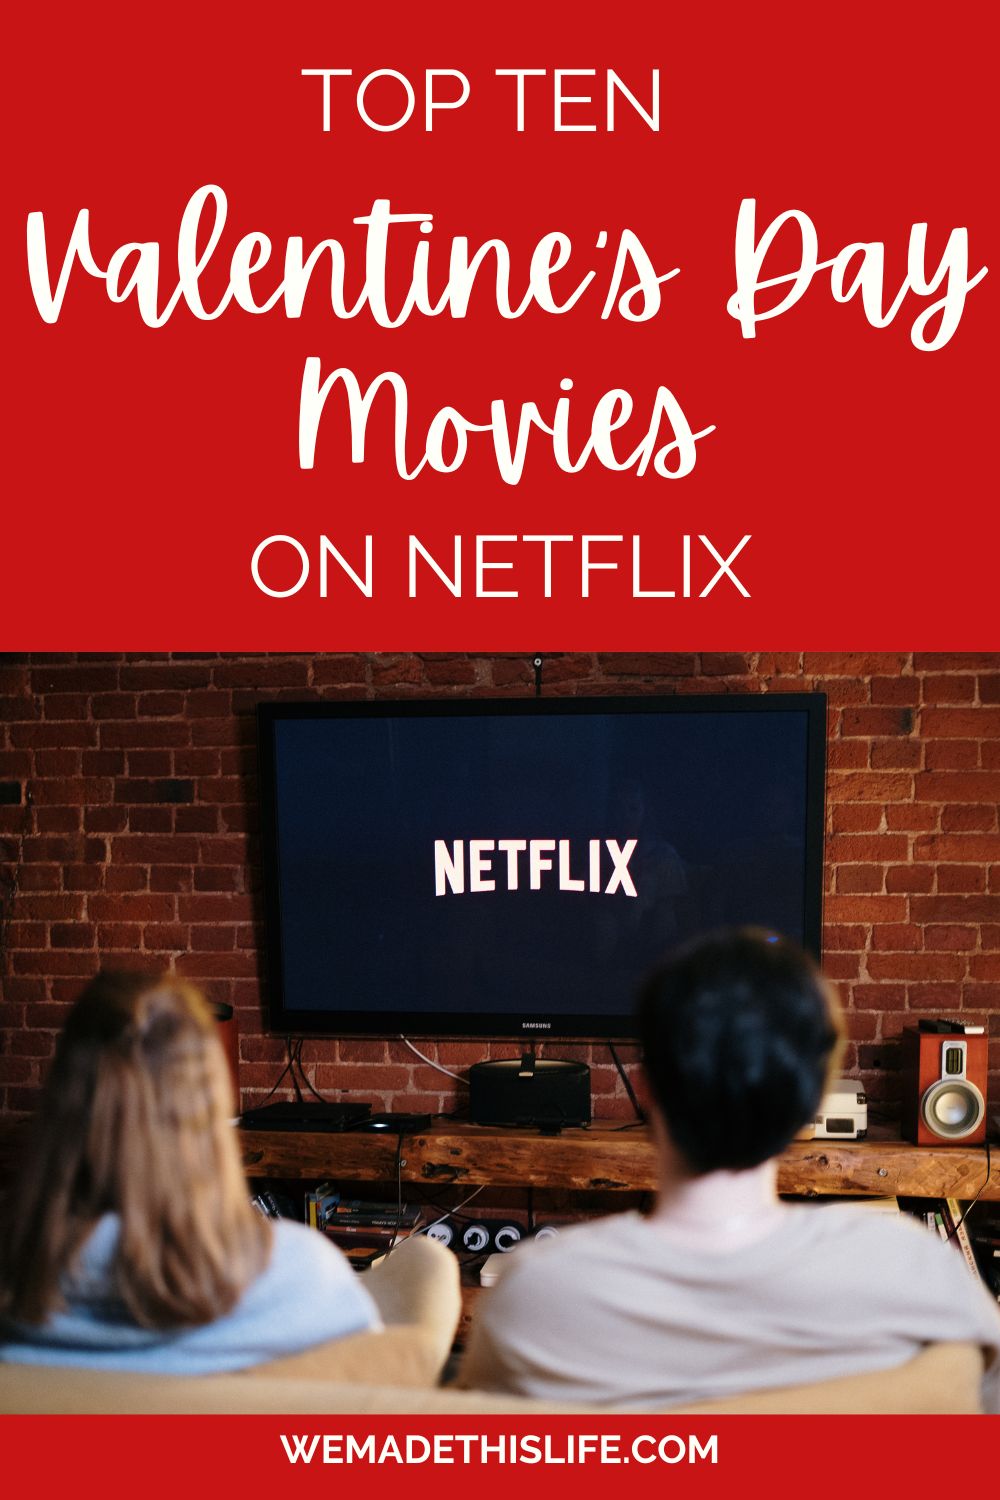 Top 10 Valentines Day Movies on Netflix